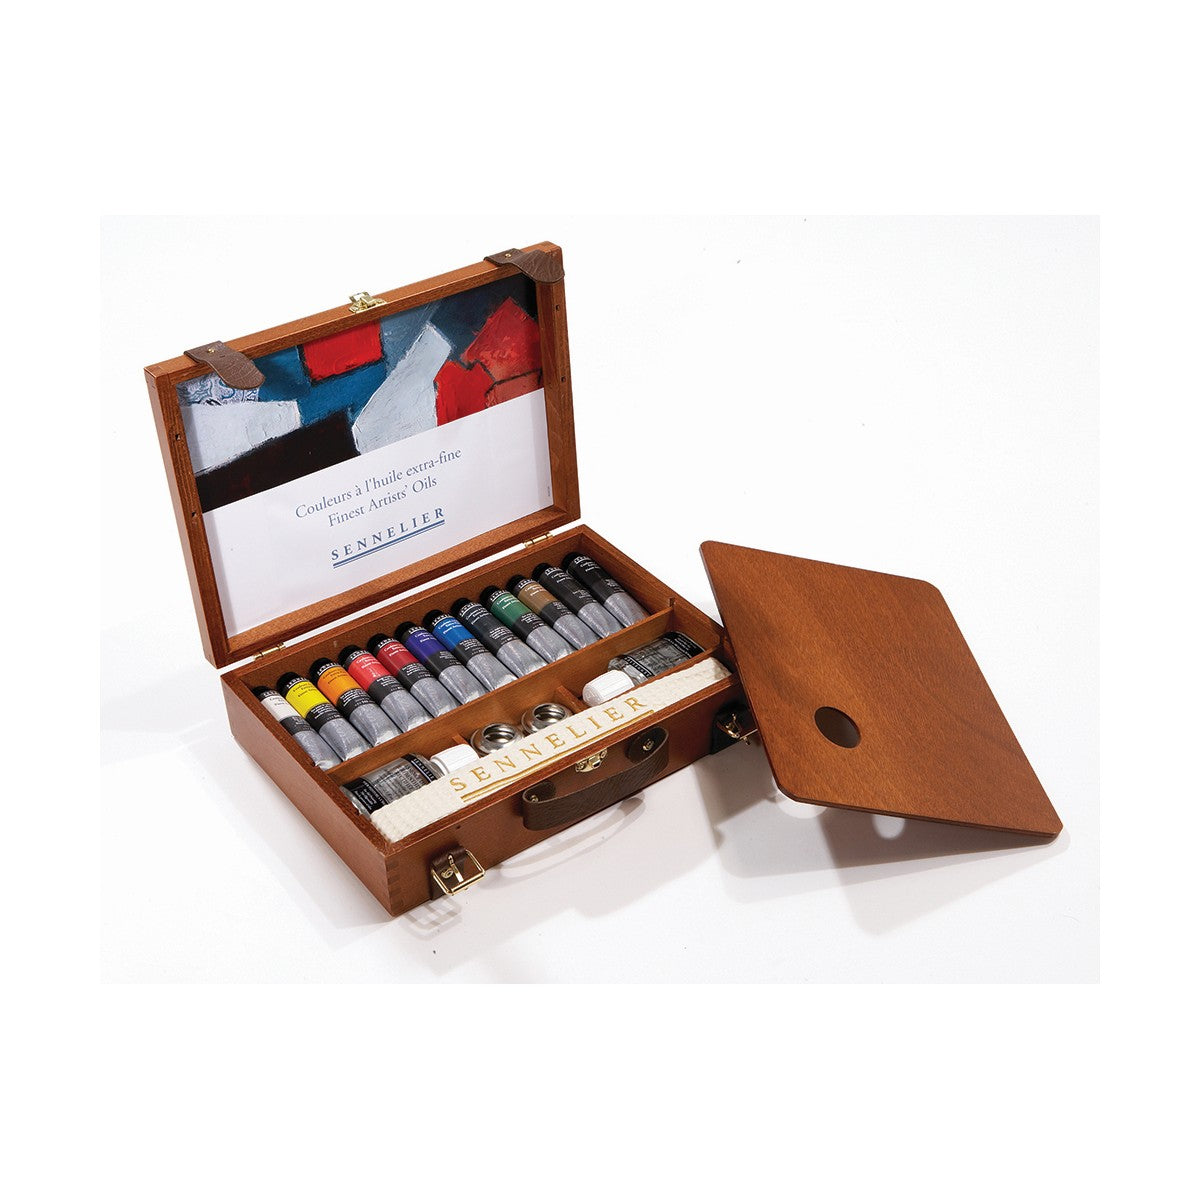 Sennelier Artists' Oils  in wooden travel box - Melbourne Etching Supplies